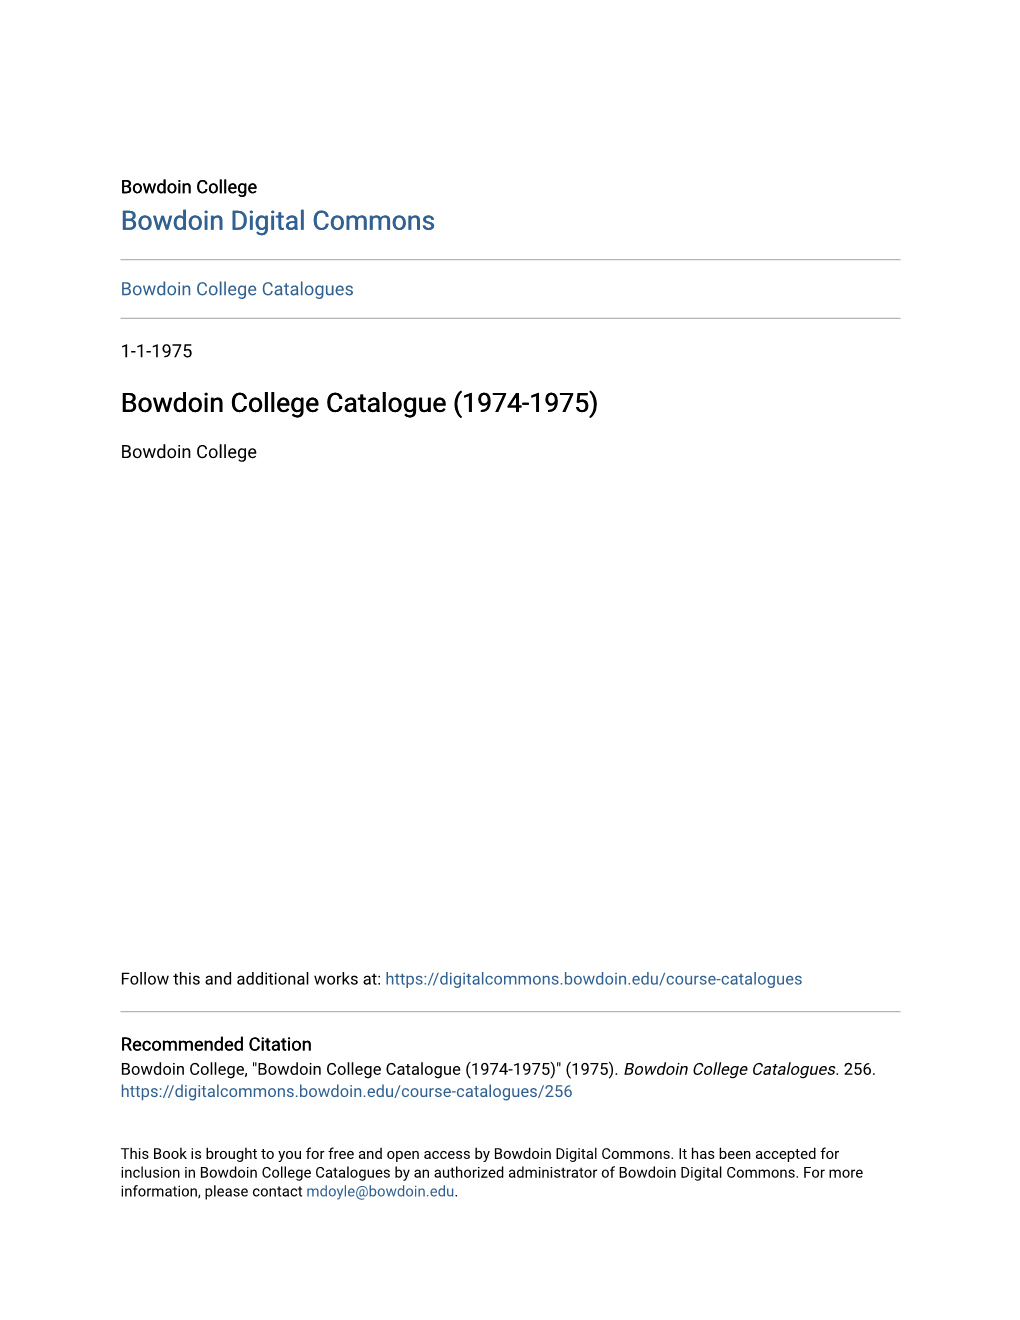 Bowdoin College Catalogue (1974-1975)